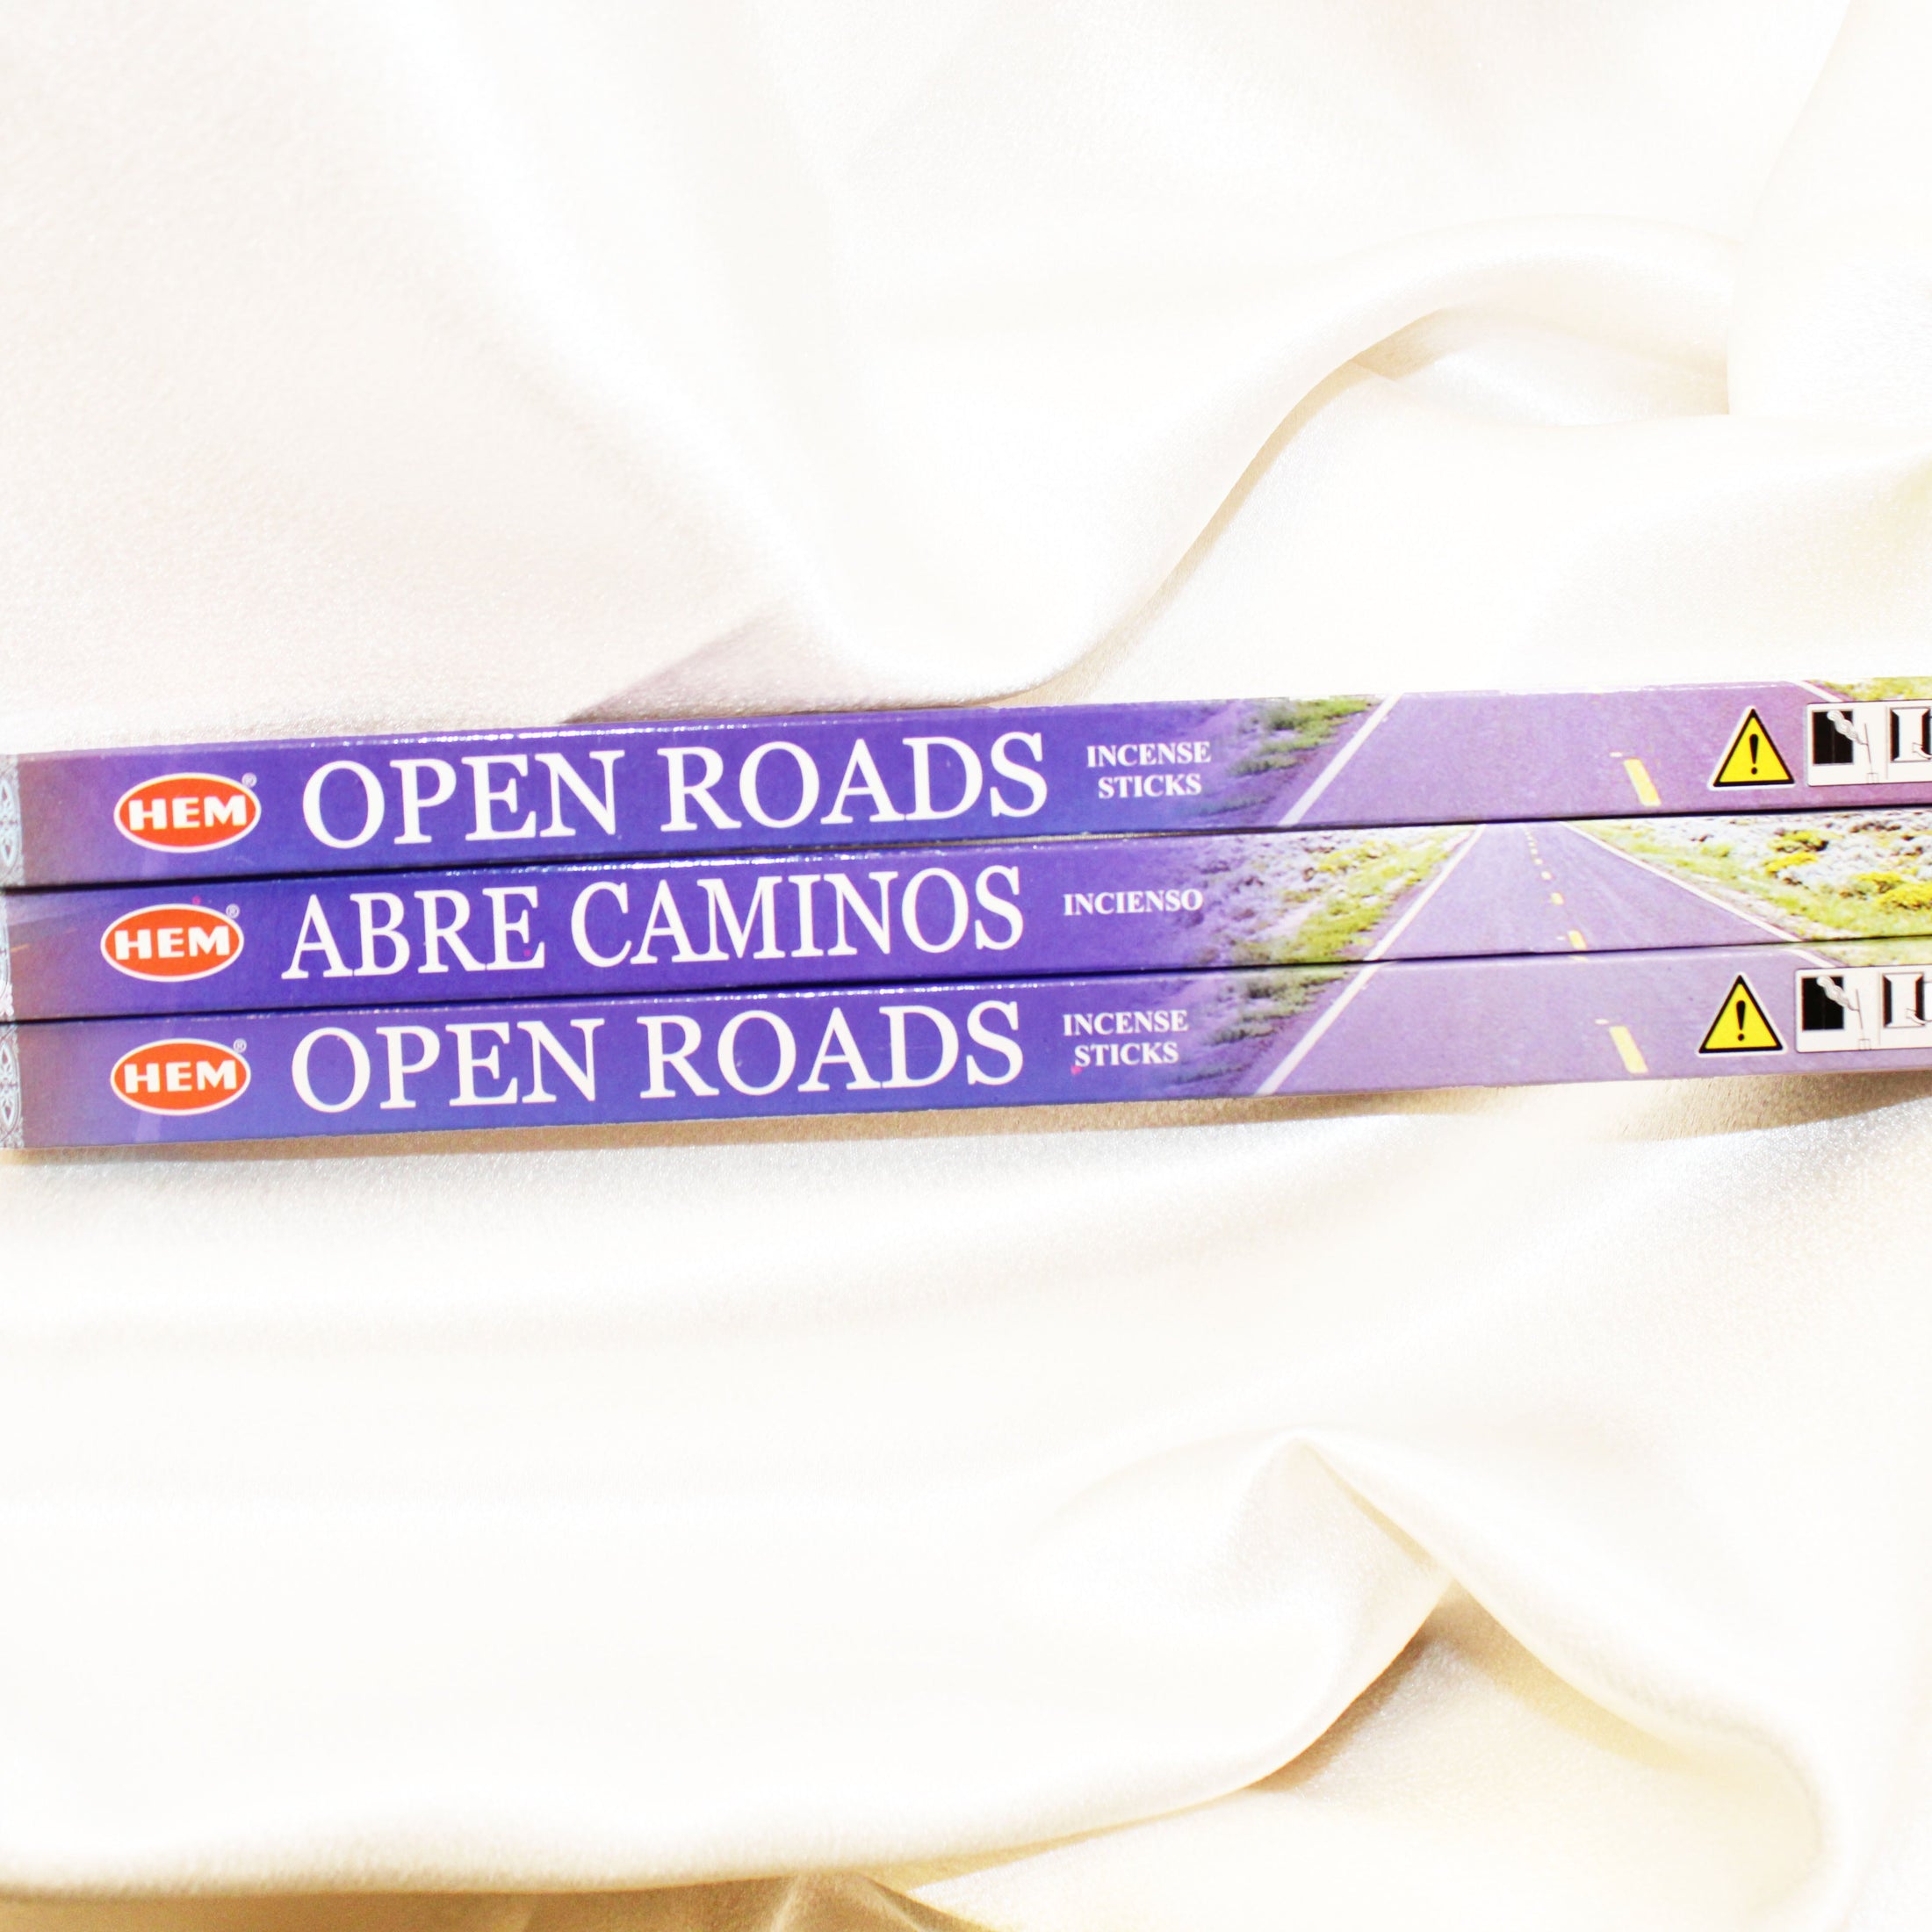 Hem- Open Roads (Abre Caminos) Incense (Incensio) Sticks